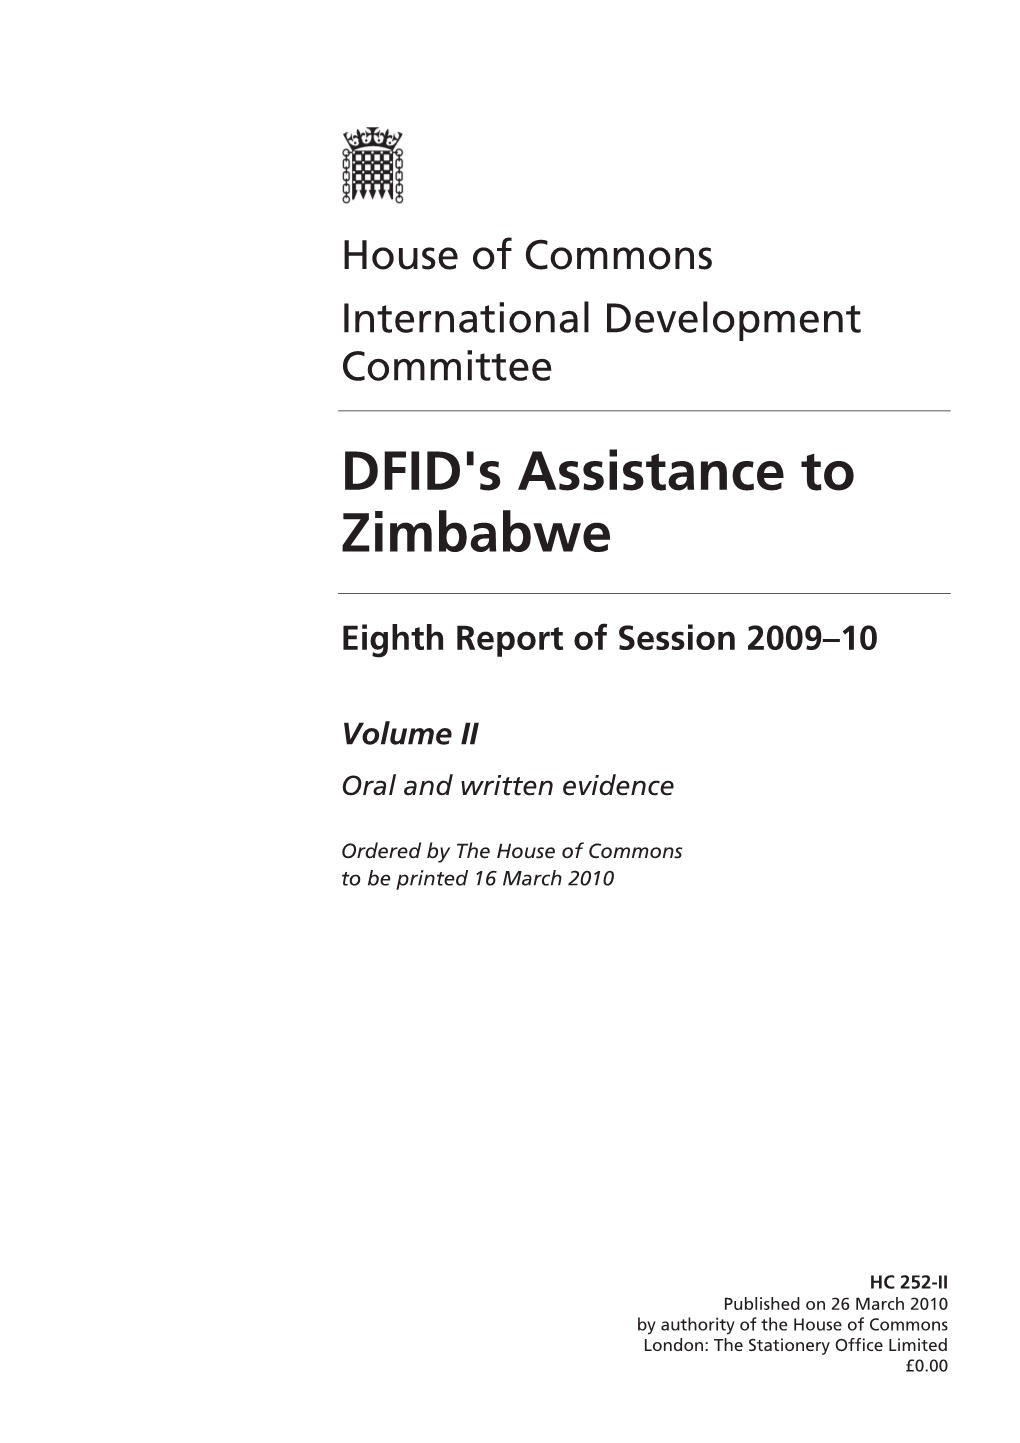 DFID's Assistance to Zimbabwe